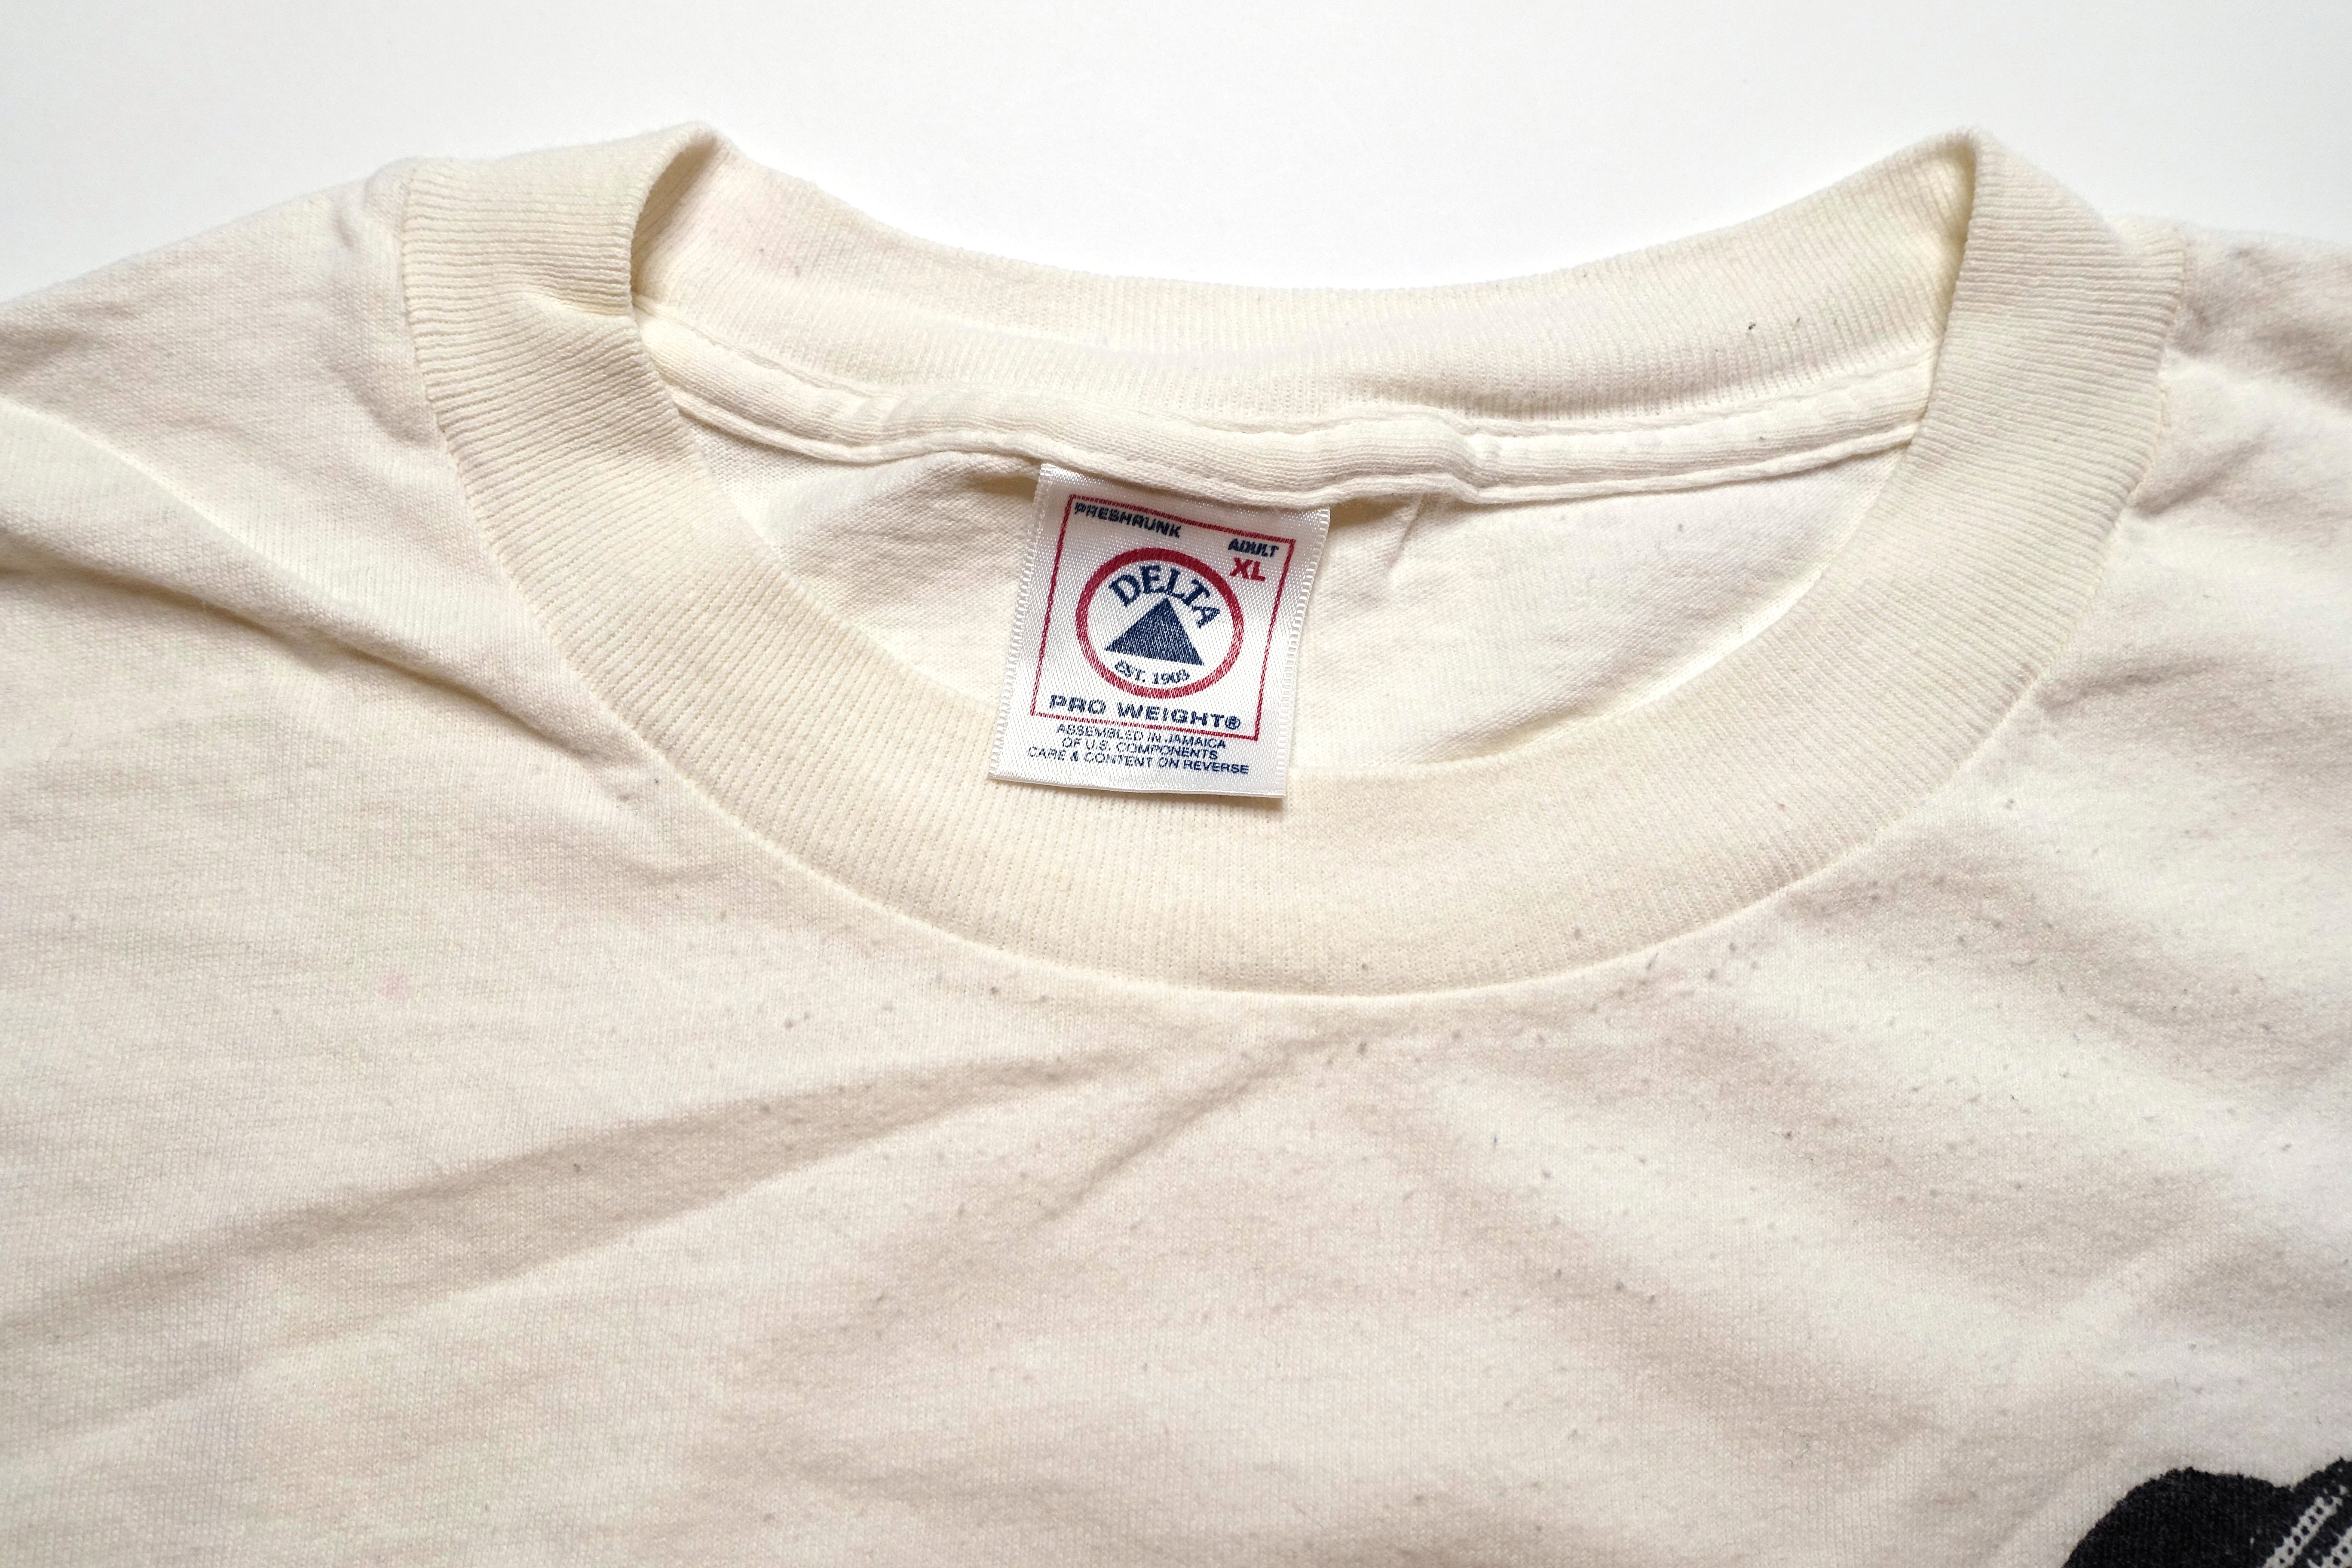 Minor Threat - 90's Ian McKaye Shirt Size XL